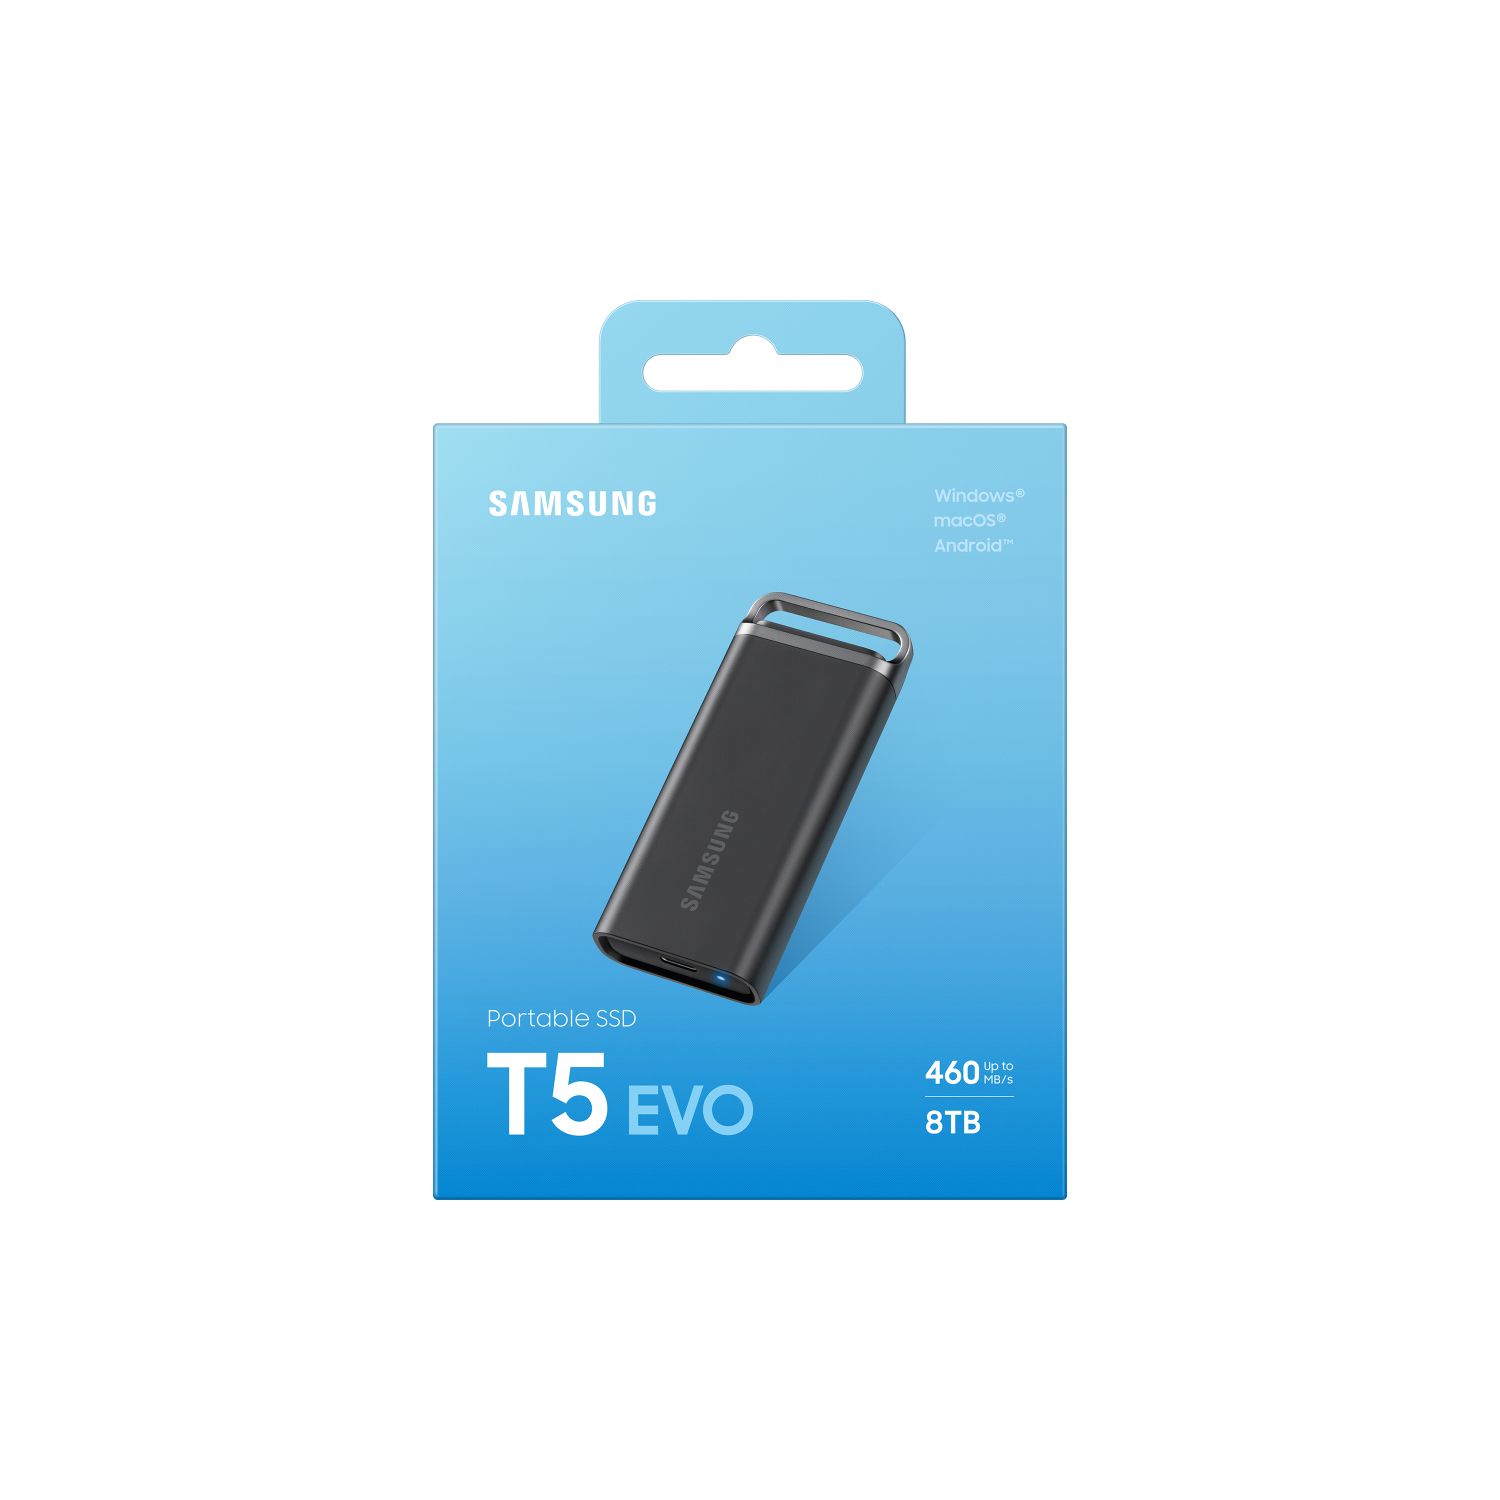 MU-PH8T0S/EU - SSD Samsung T5 Evo 8Tb USB 3.0 Lectura 460 Mb/s Escritura 460 Mb/s Negro (MU-PH8T0S/EU)